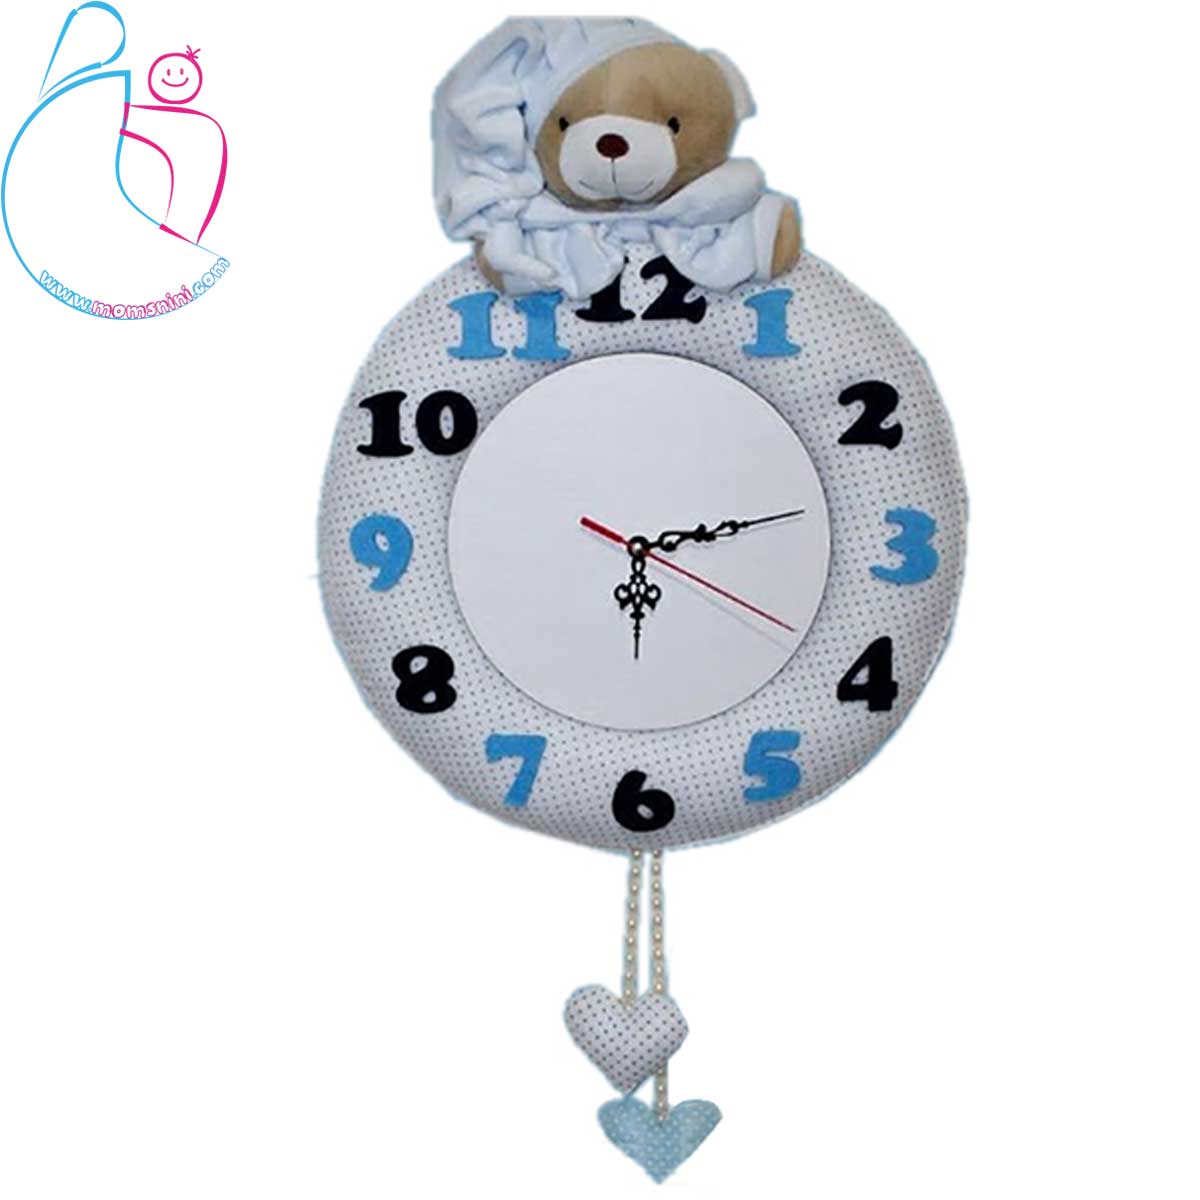 ساعت اتاق کودک آرامیس مدل خرس